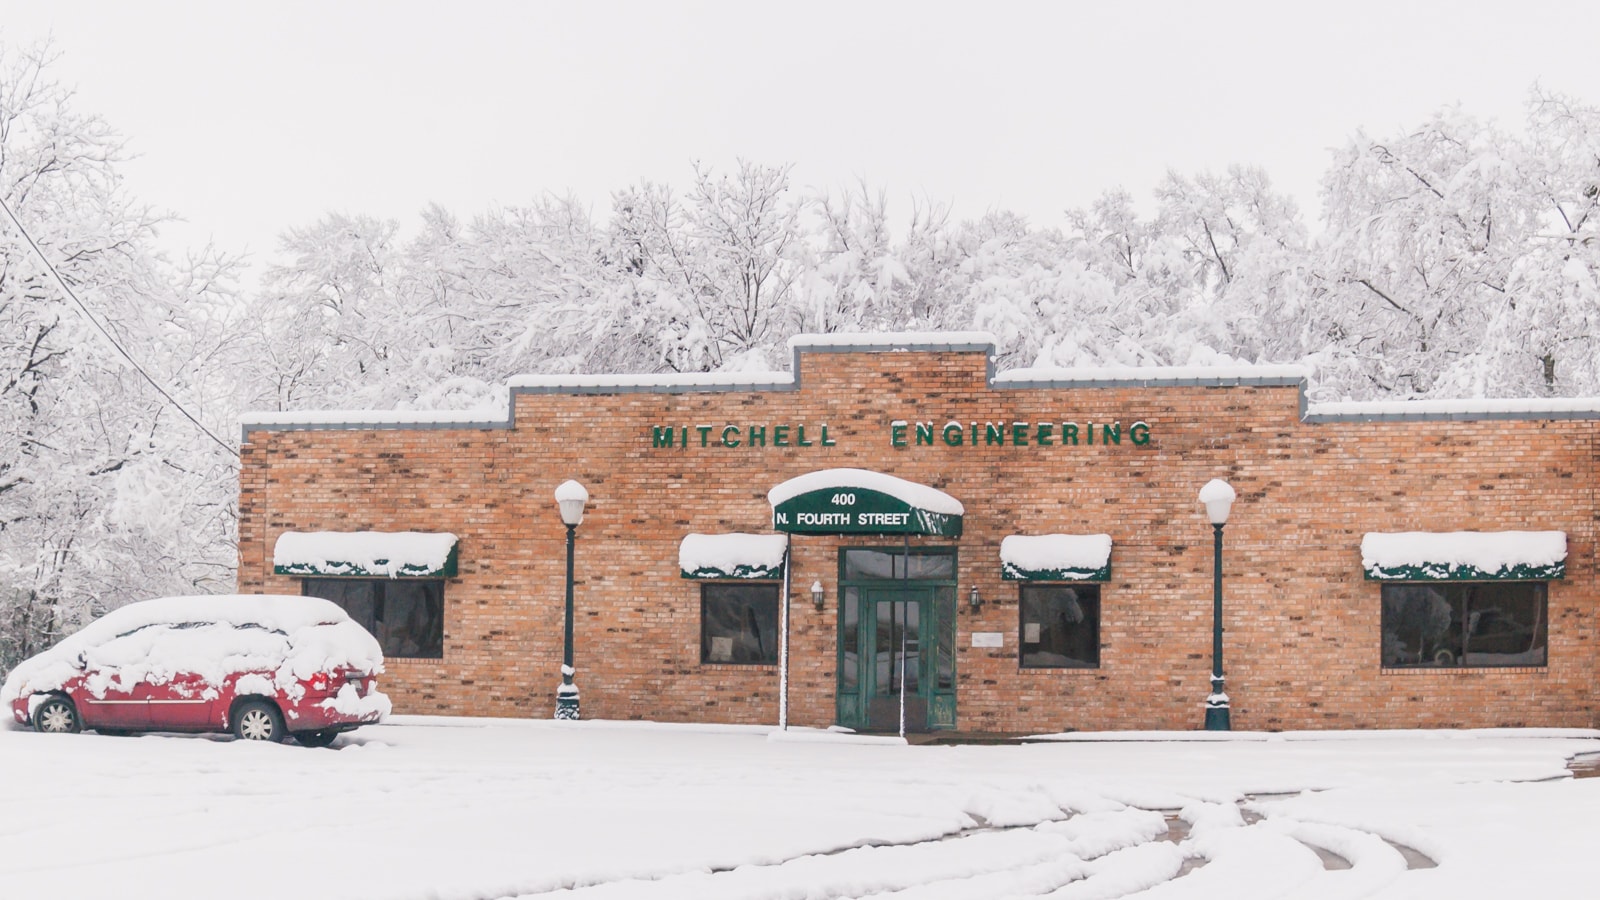 Mitchell Engineering in Wills Point snow